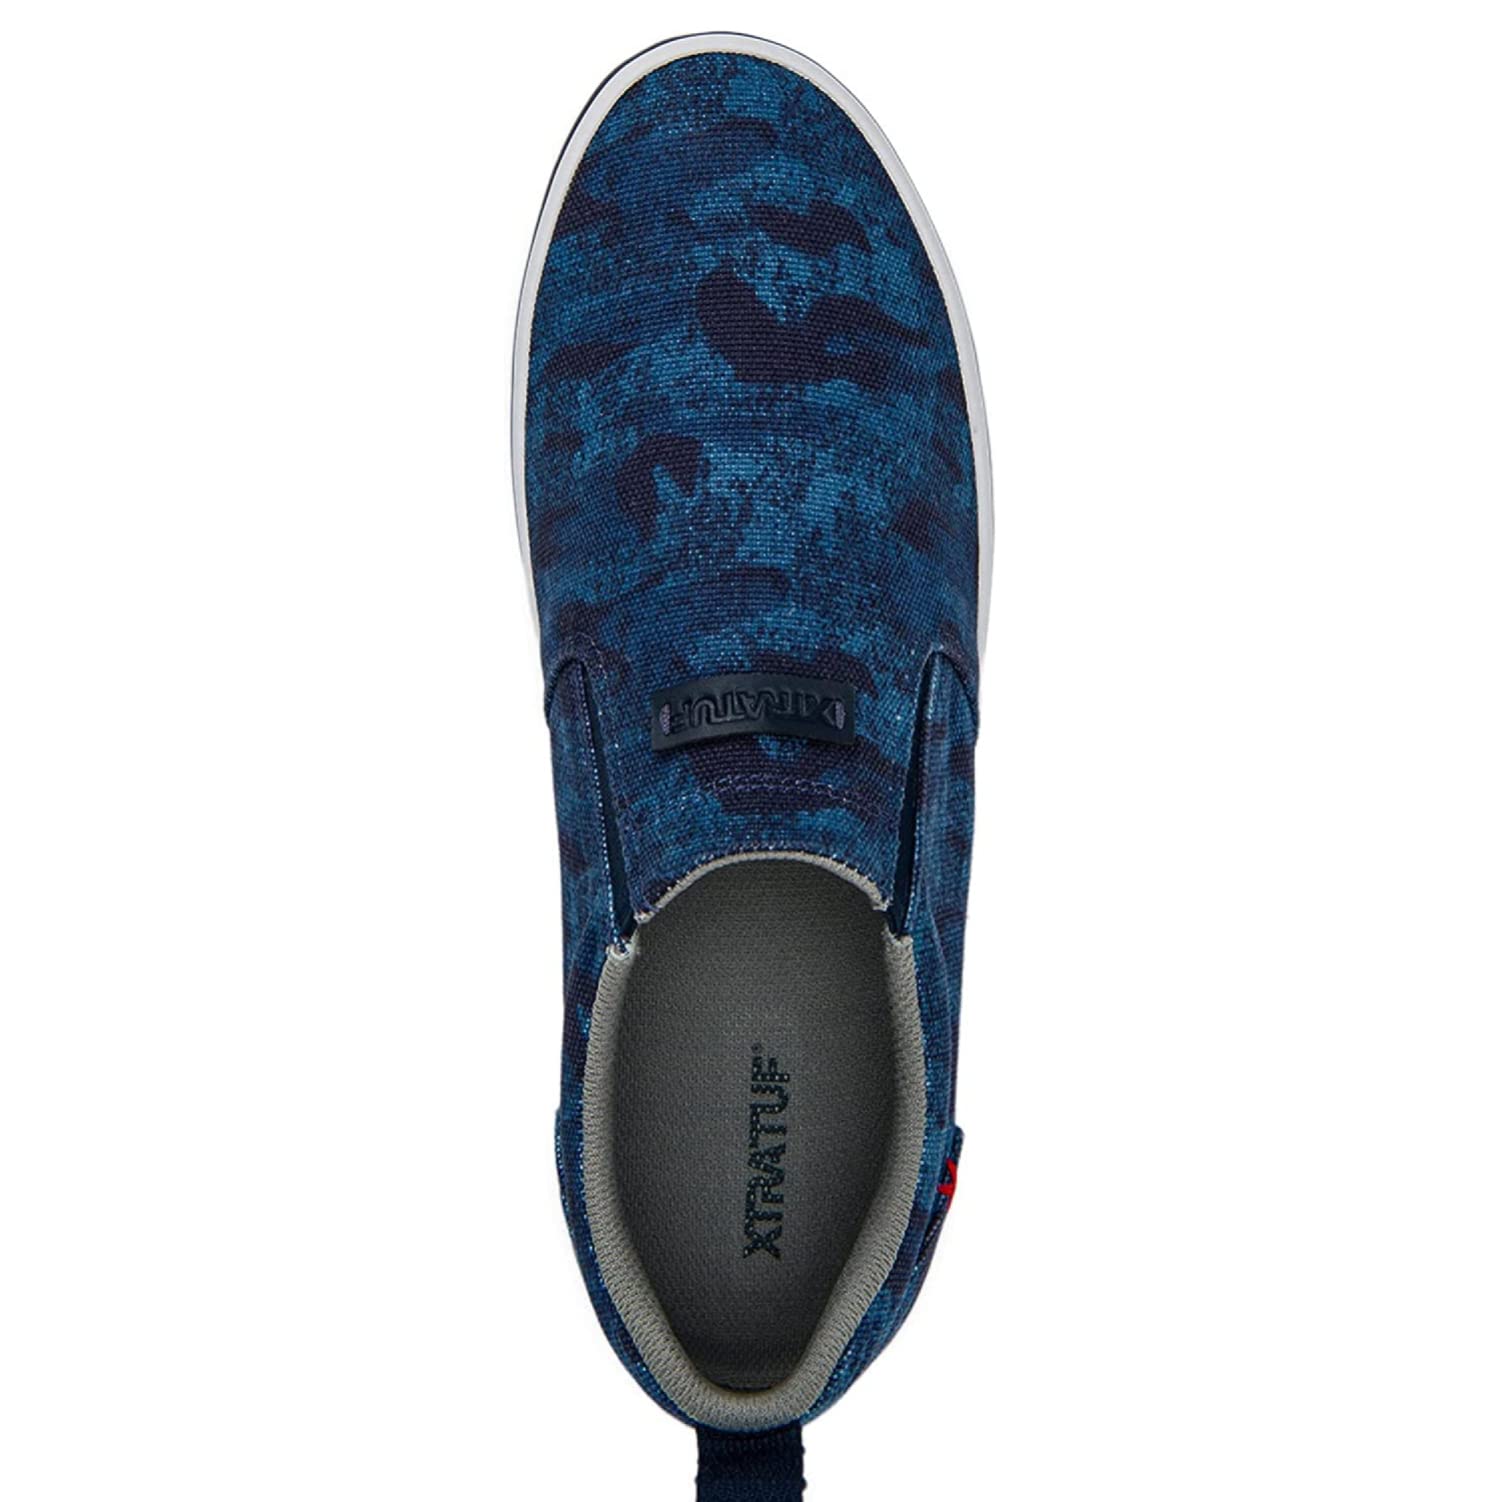 Xtratuf Men's Sharkbyte Durable Water-Resistant Breathable Slip-Resistant Fishing Deck Shoes